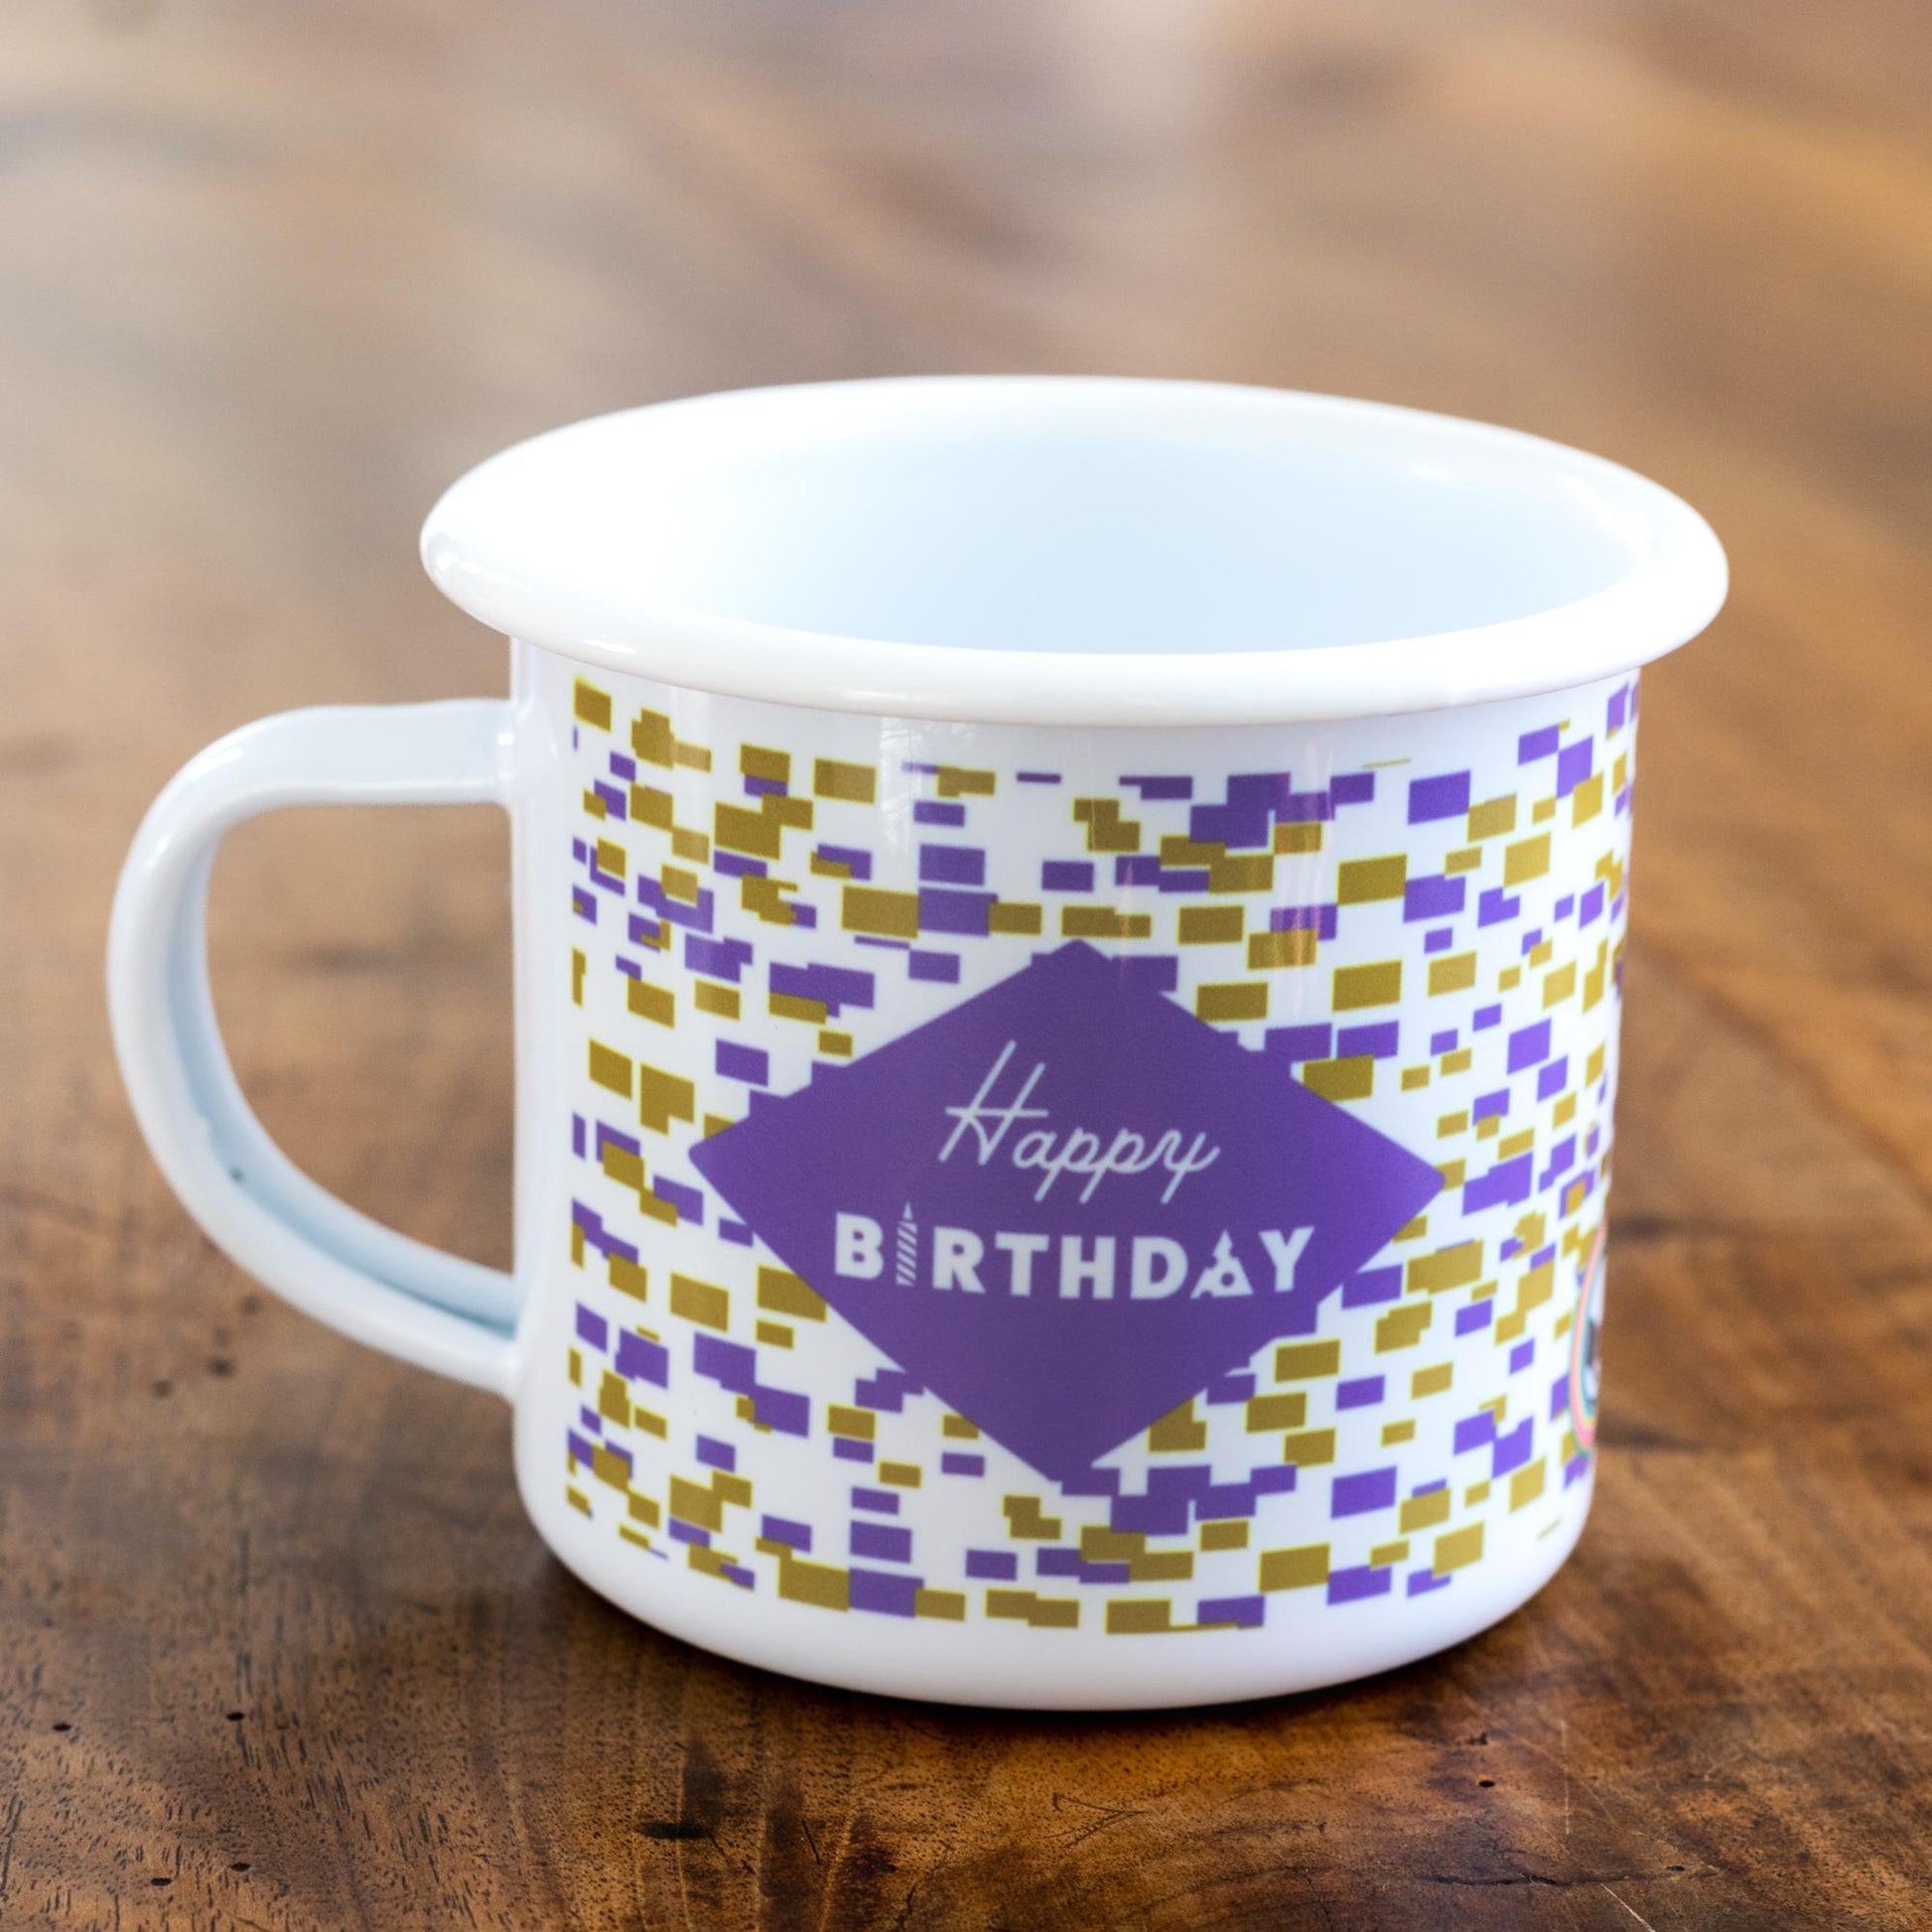 Happy Birthday Enamel Mug with Purple Confetti - Blue Kite Press